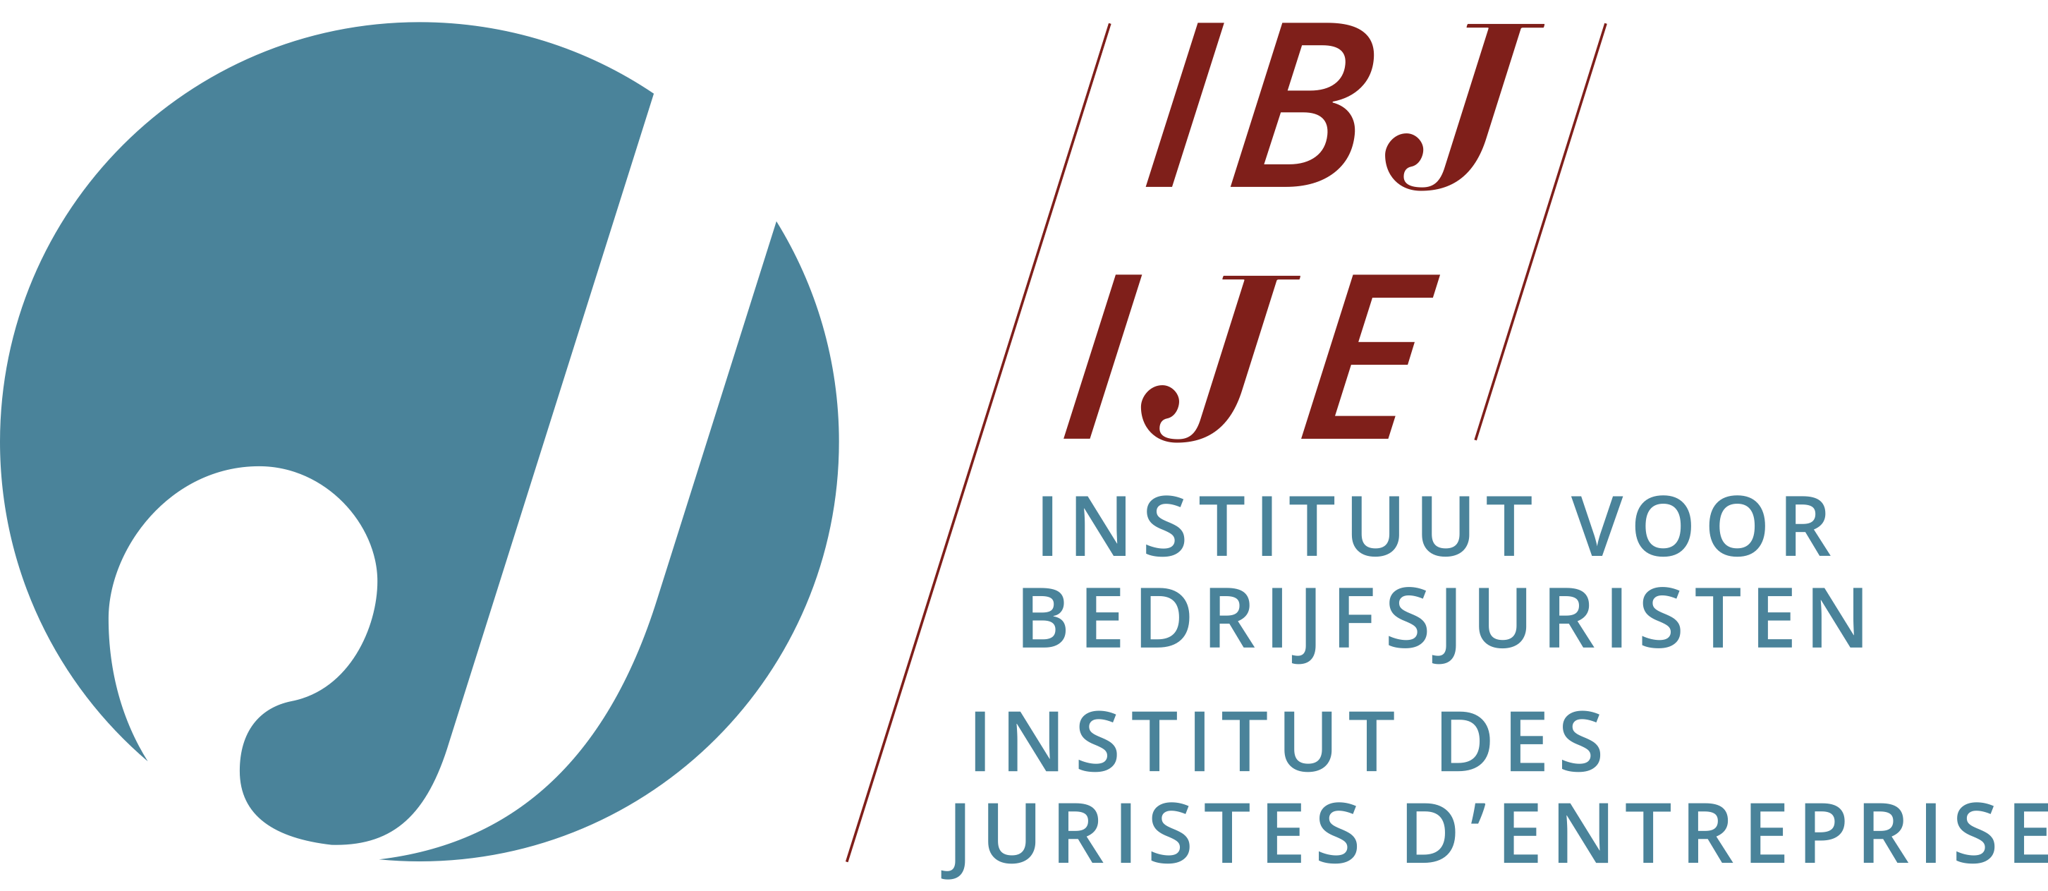 Instituut voor bedrijfsjuristen / Institut des juristes d'entreprise logo